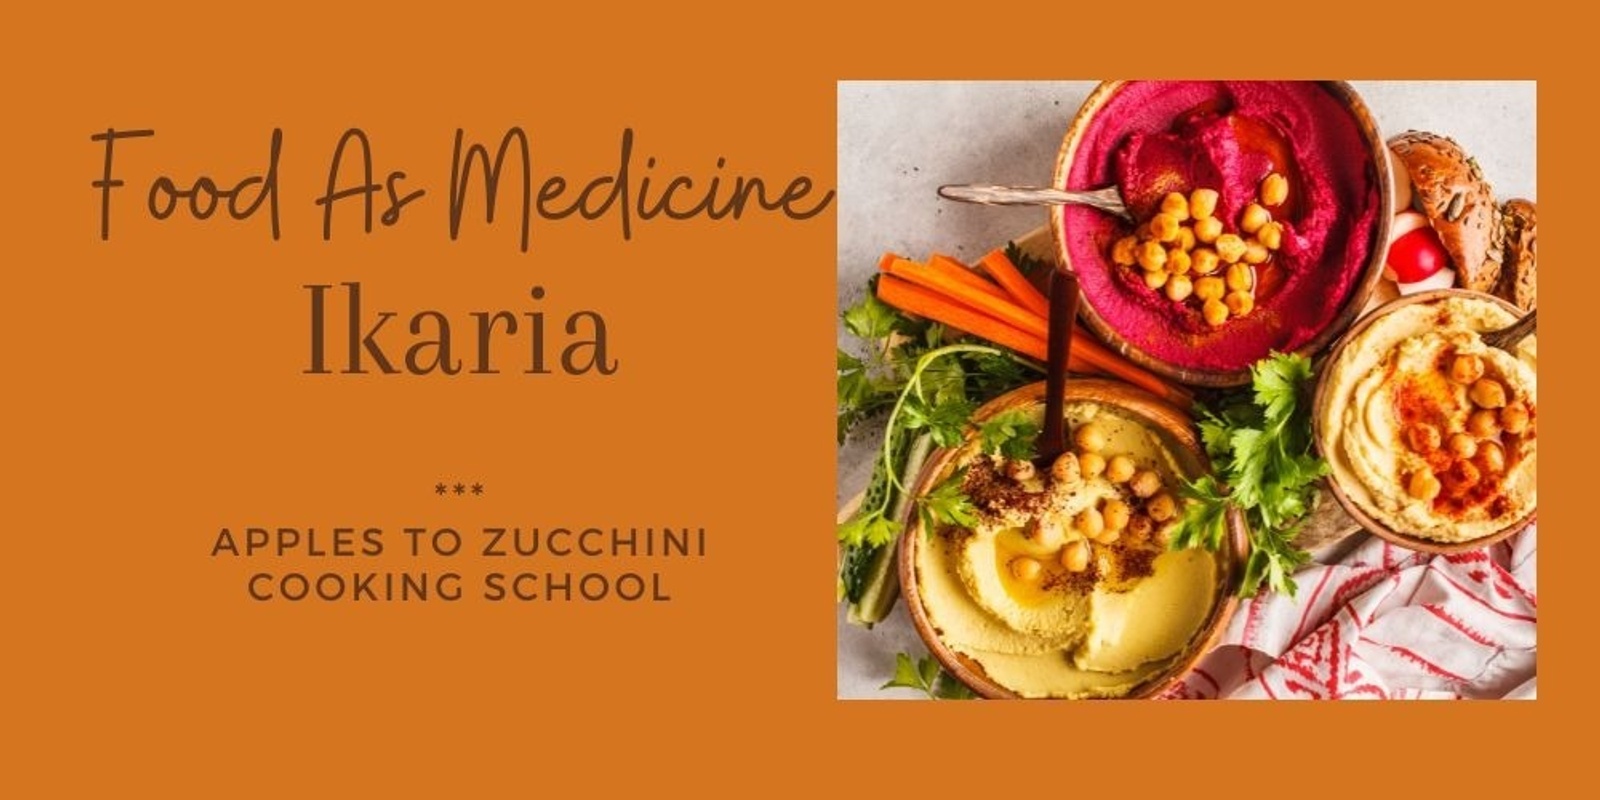 Banner image for  Food As Medicine Session #4 Ikaria